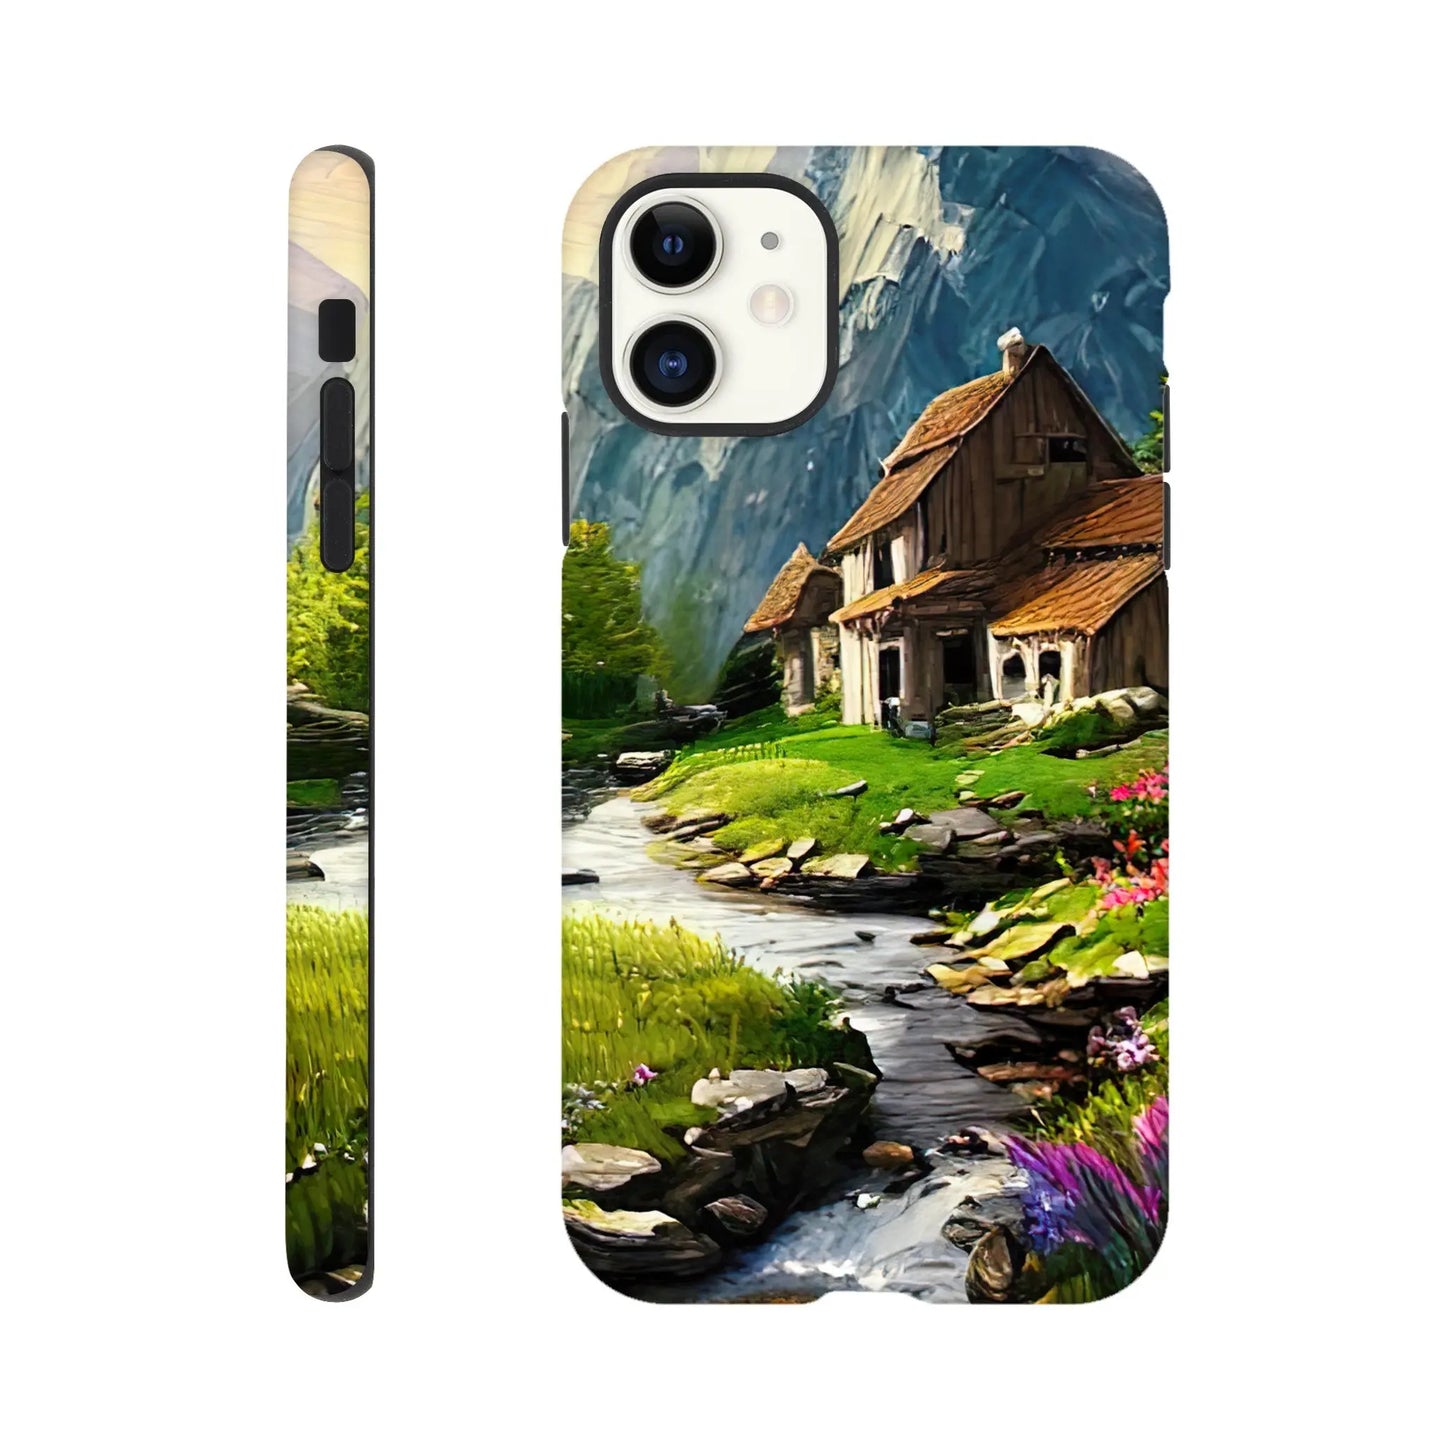 Smartphone-Hülle "Hart" - Berglandschaft - Malerischer Stil, KI-Kunst RolConArt, Landschaften, iPhone-11